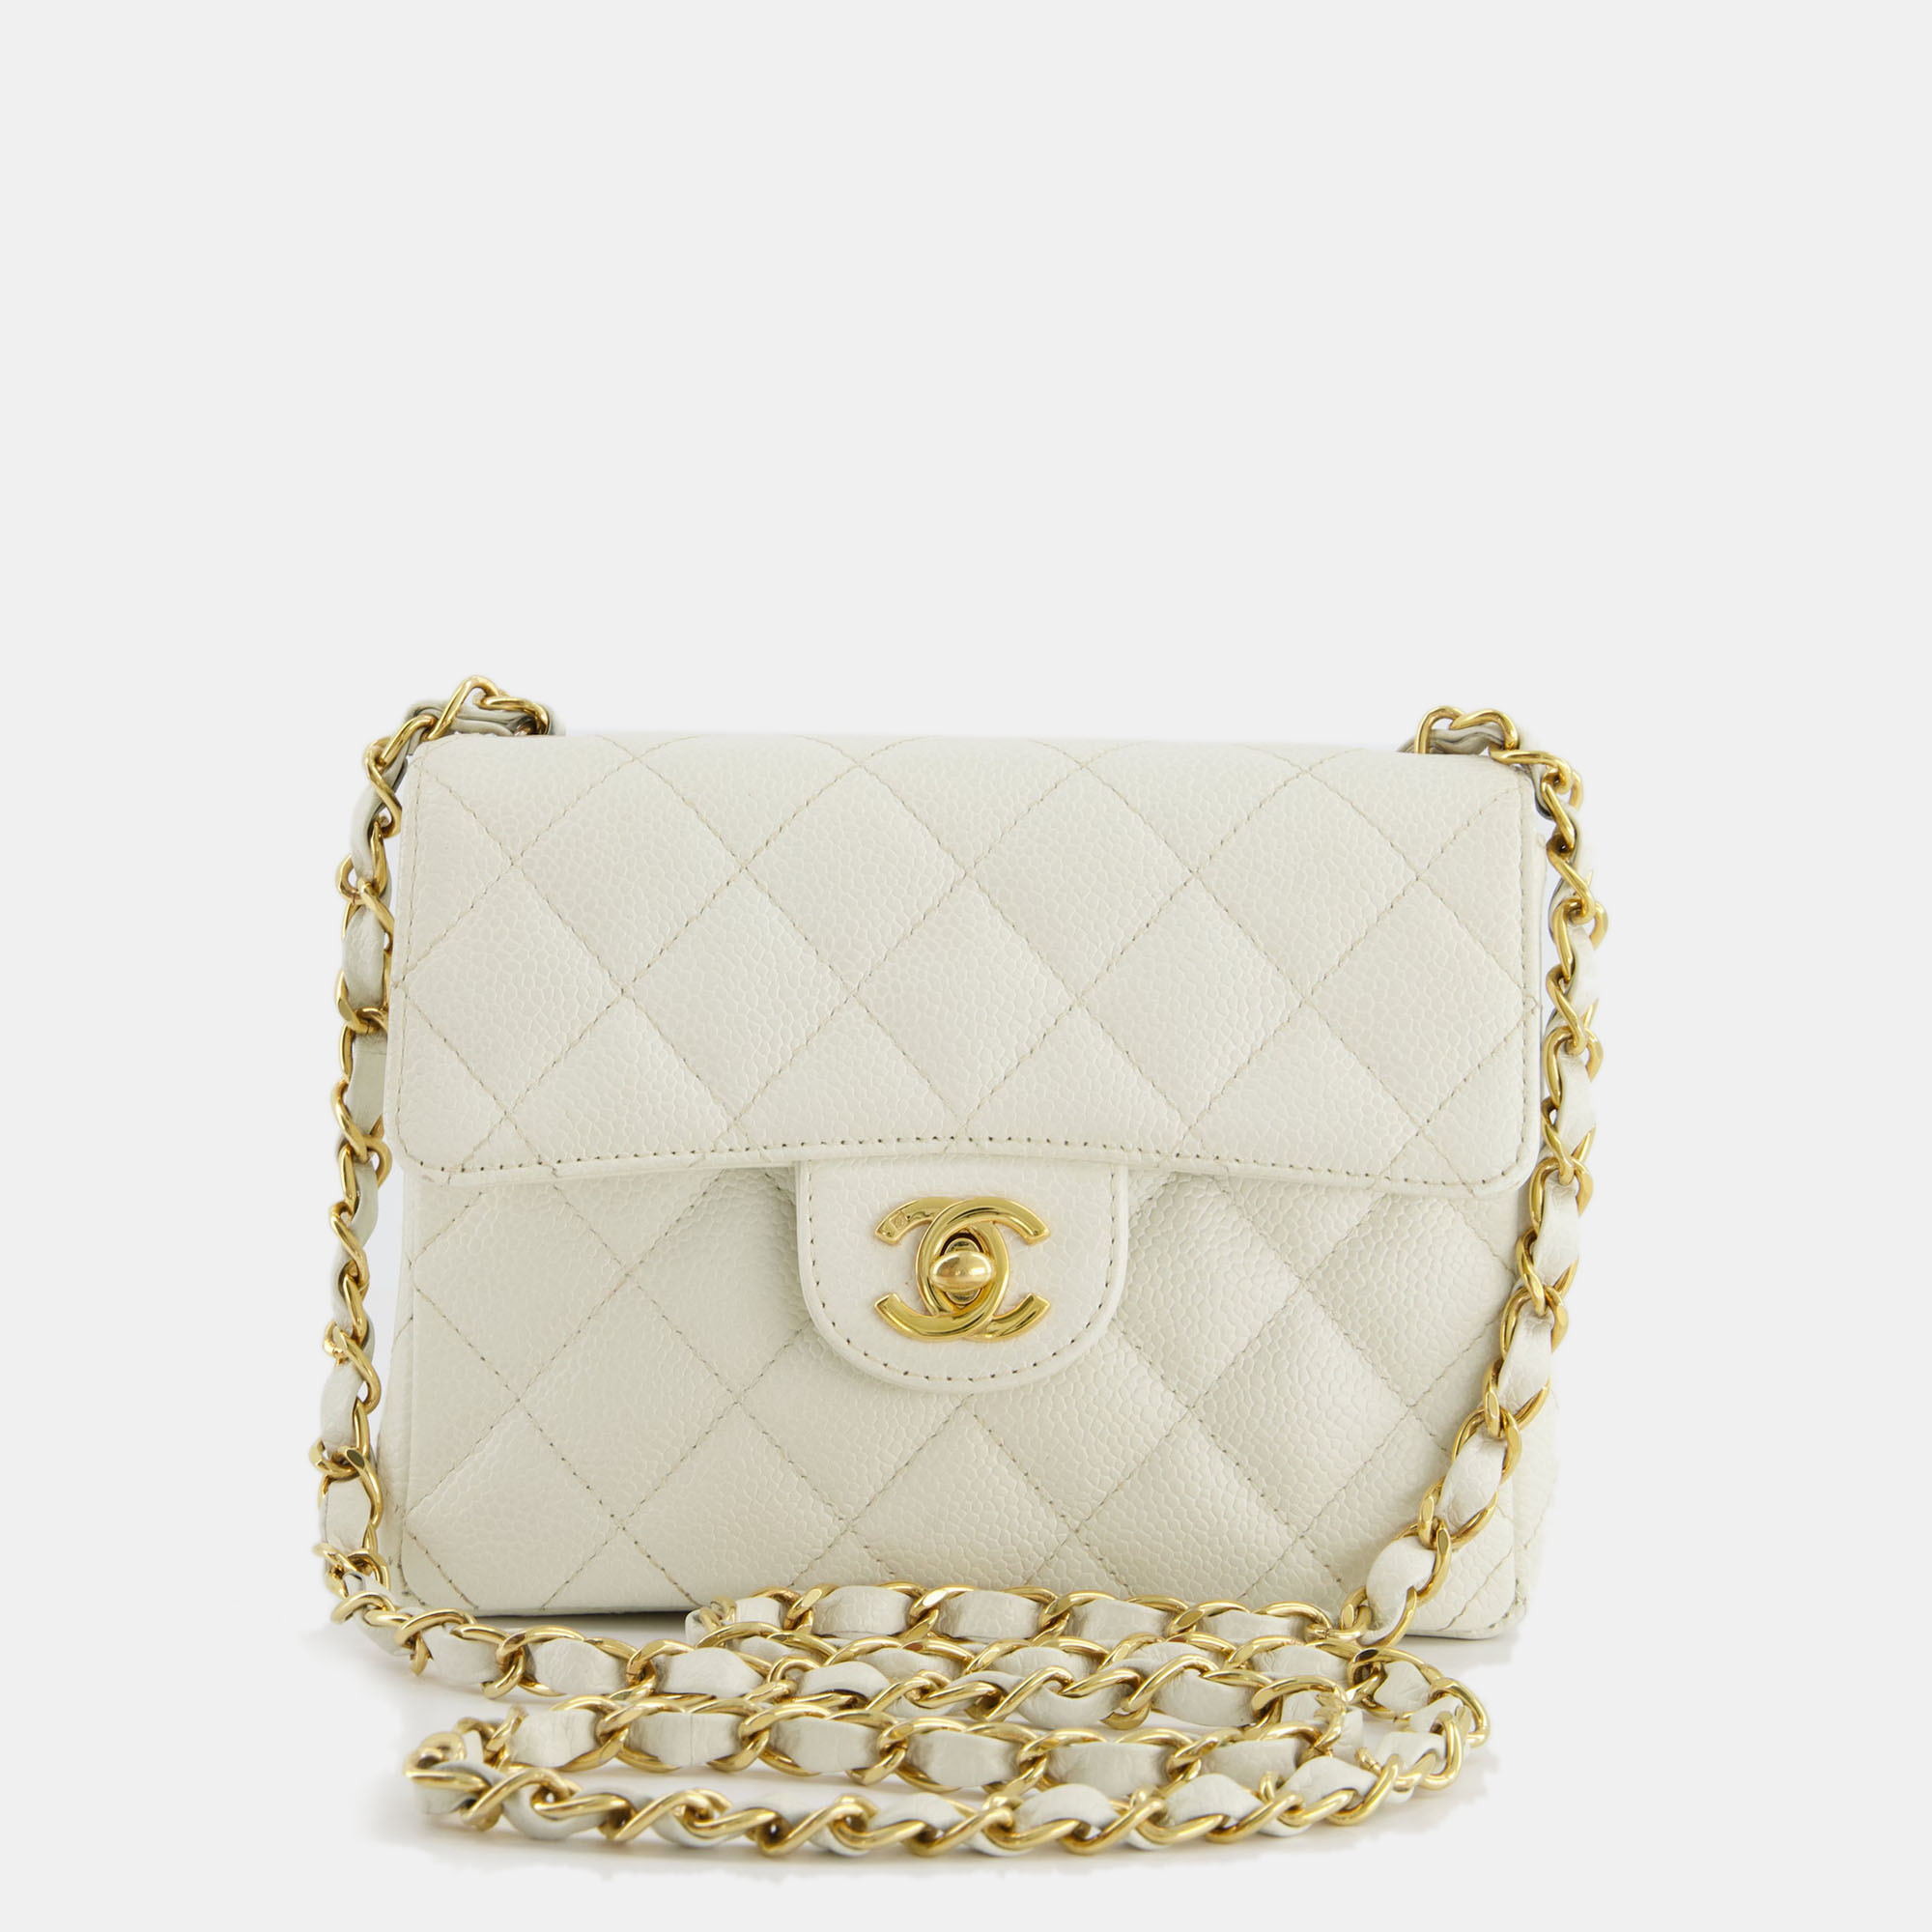 Chanel vintage white caviar mini square flap bag with 24k gold hardware